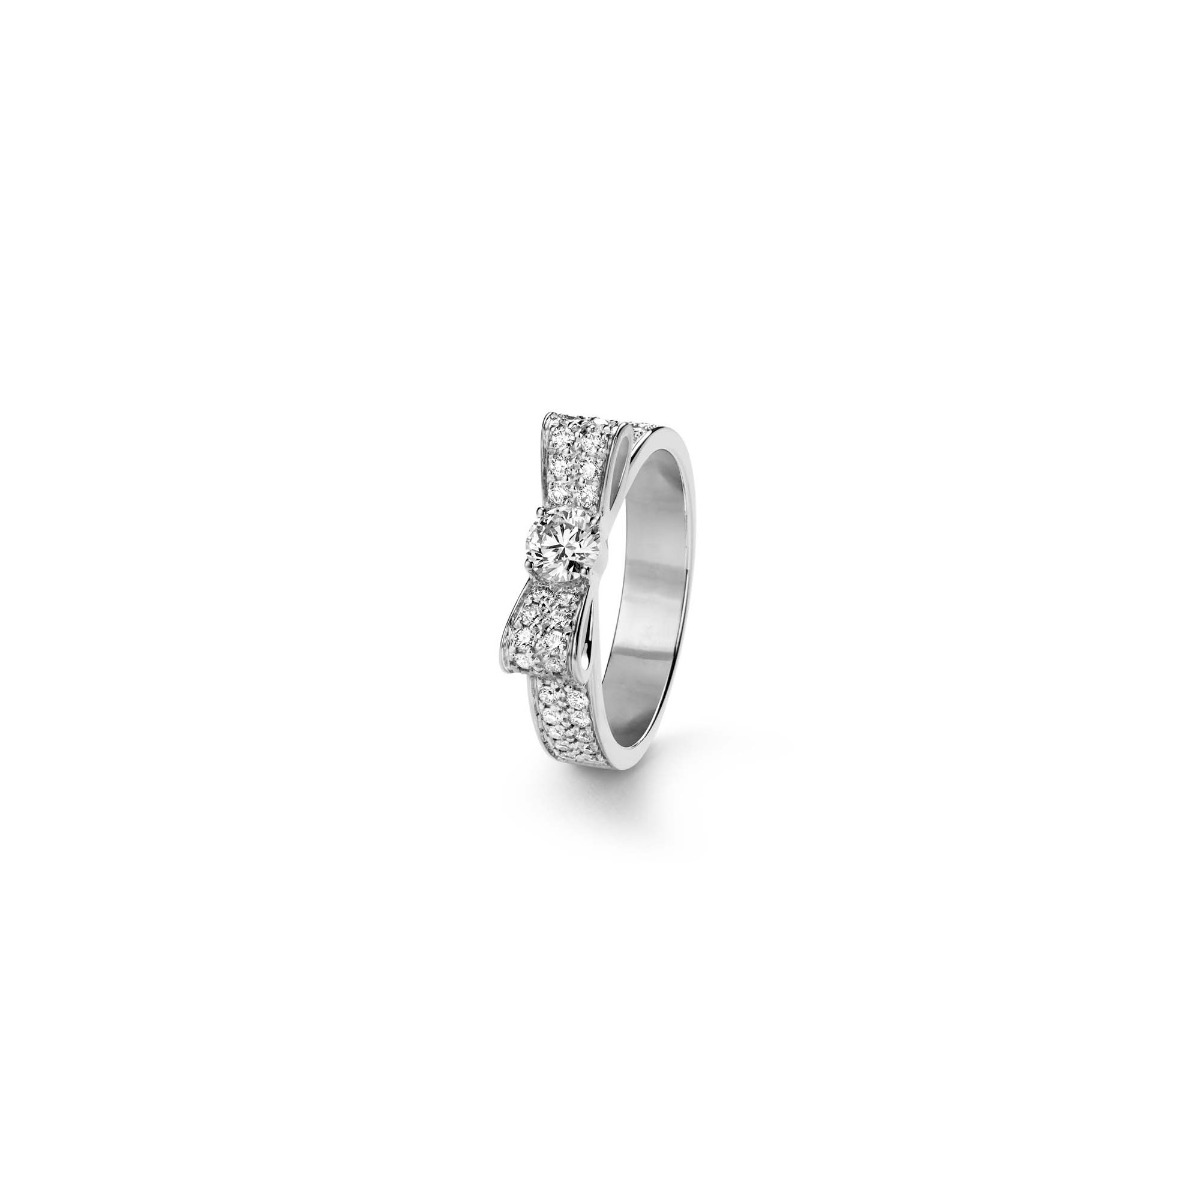 Ruban high jewellery pink sapphire ring, Chanel